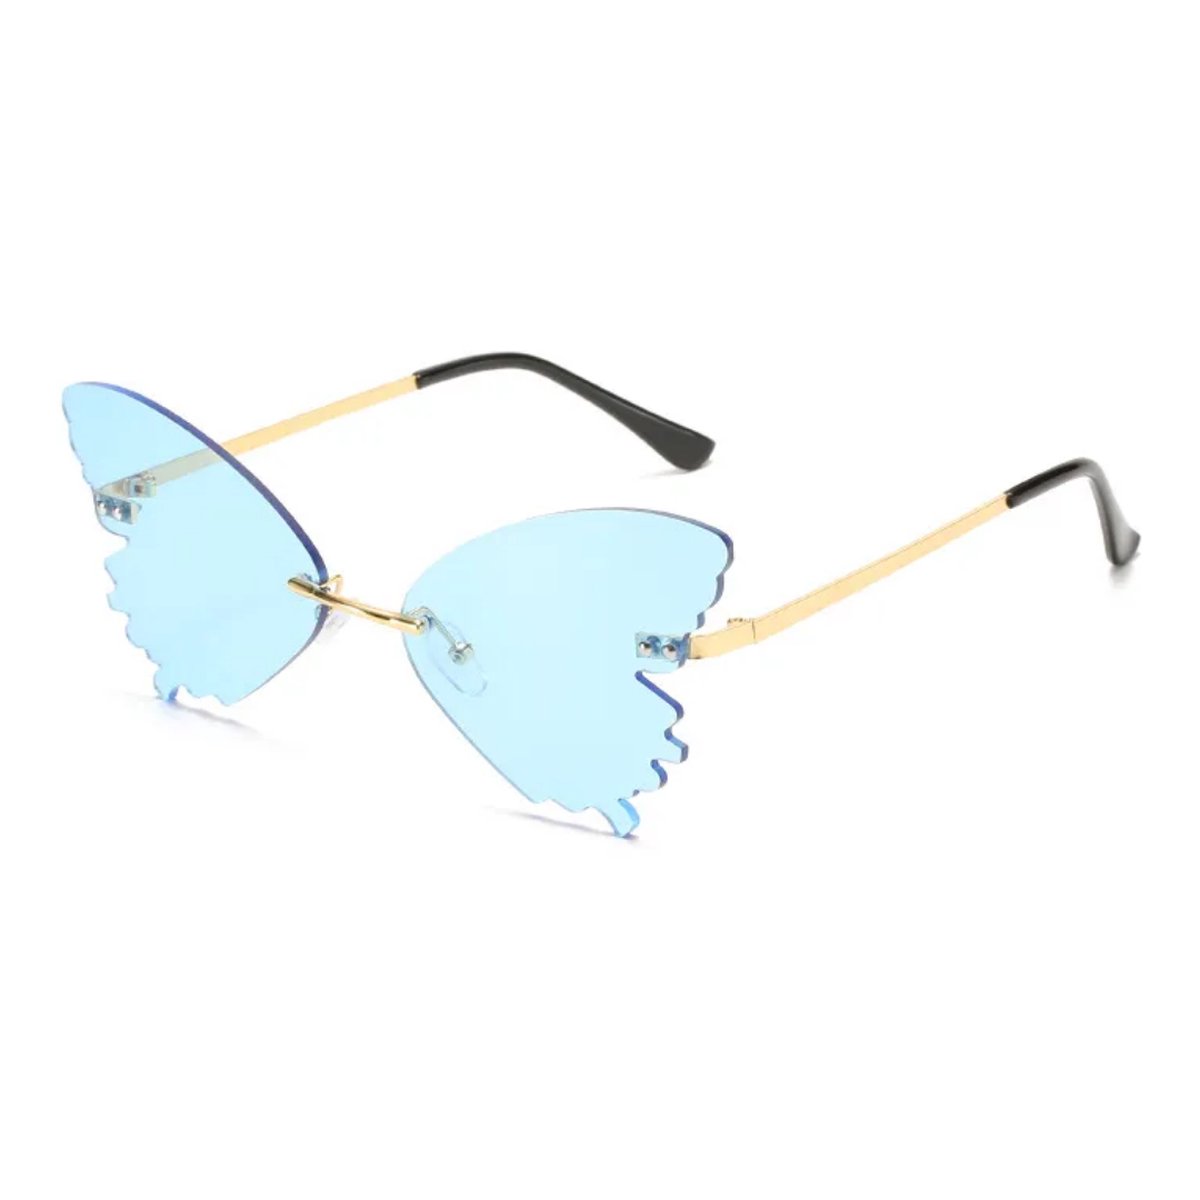 Vlinder zonnebril - Blauw - festivalbril / hippie bril / technobril / rave bril / butterfly glasses / retro zonnebril / carnaval bril / accessoires / feest bril / gekke bril / verkleed bril